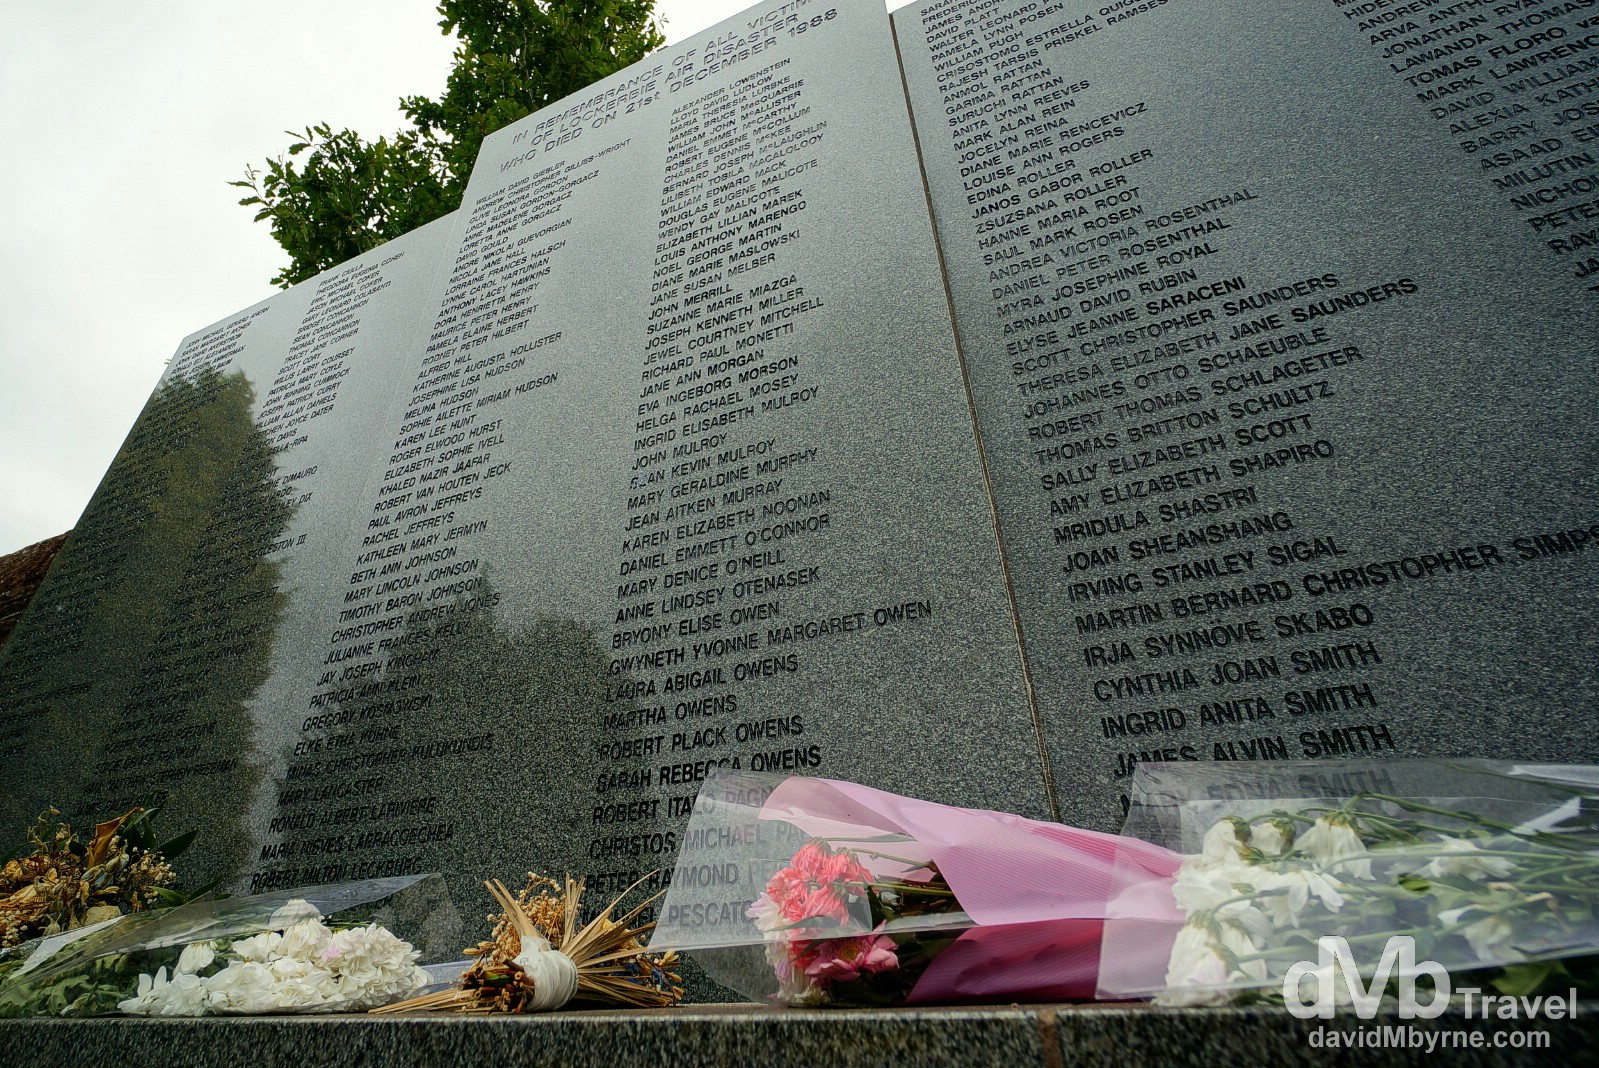 The Lockerbie Air Disaster Memorial in the Garden of Remembrance, Dryfesdale Cemetery, Lockerbie, Dumfries and Galloway, Scotland. September 19, 2014.